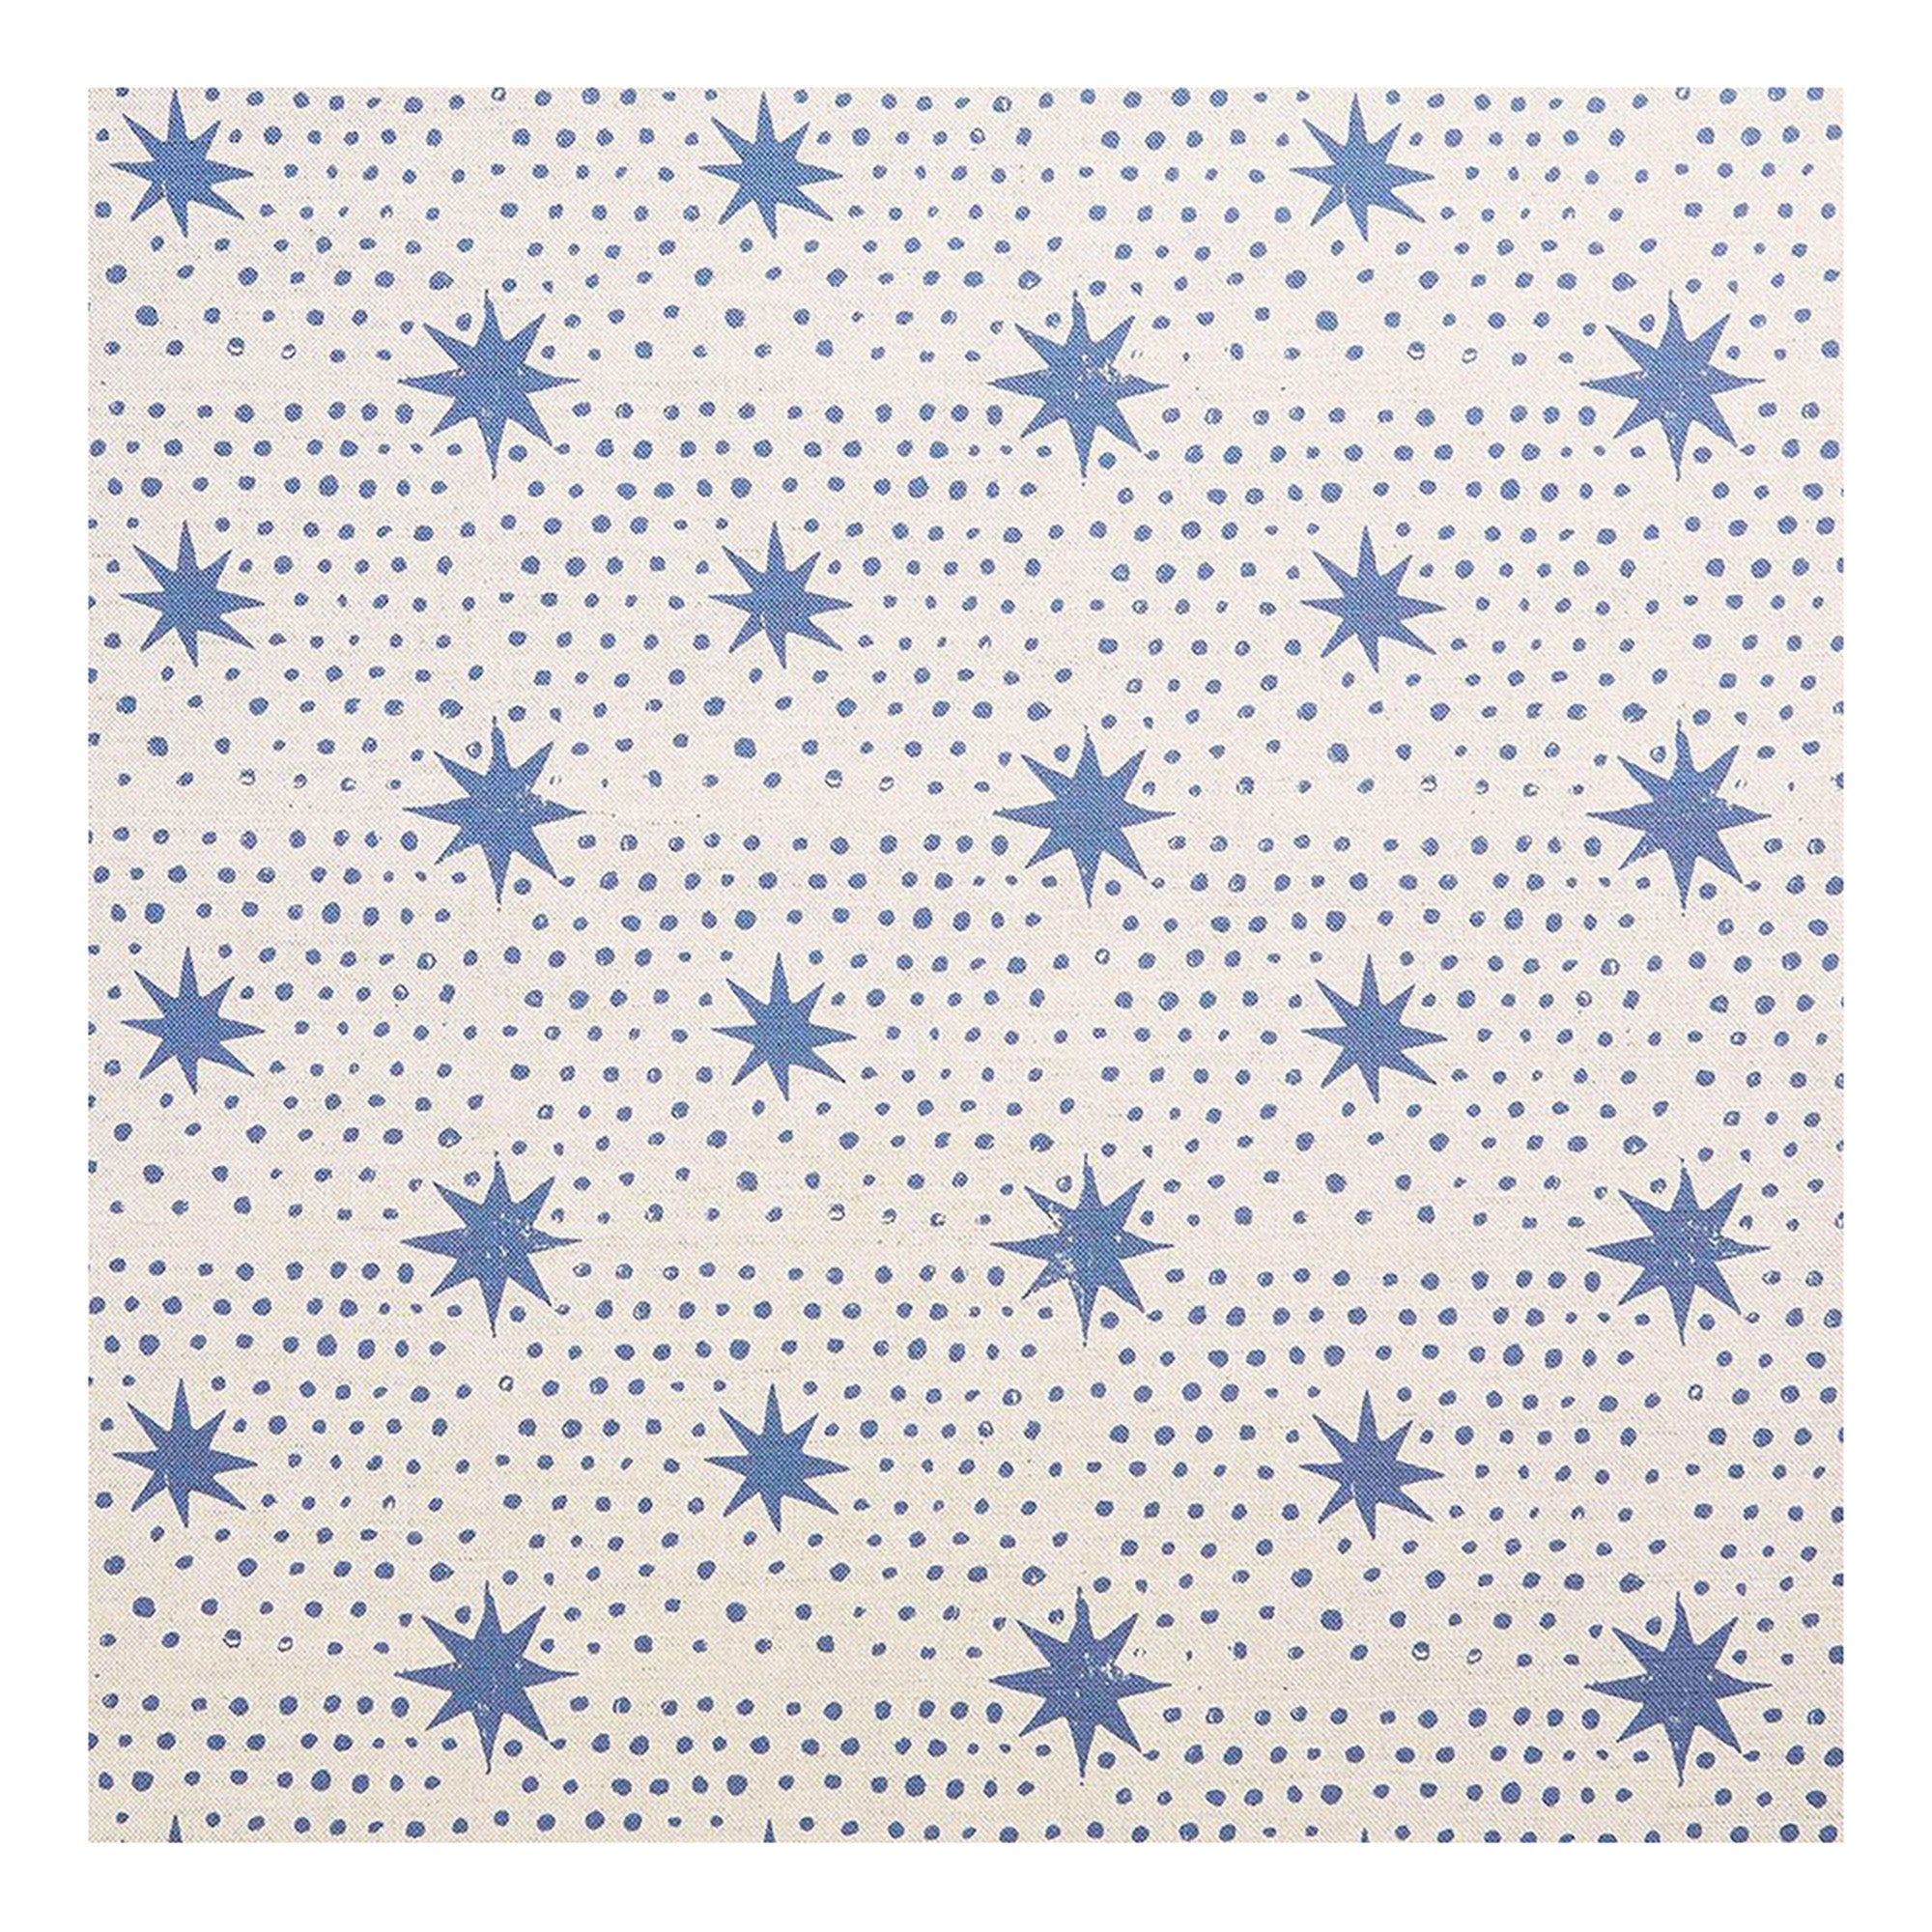 Spot & Star Printed Fabric Linen/Cotton Indigo